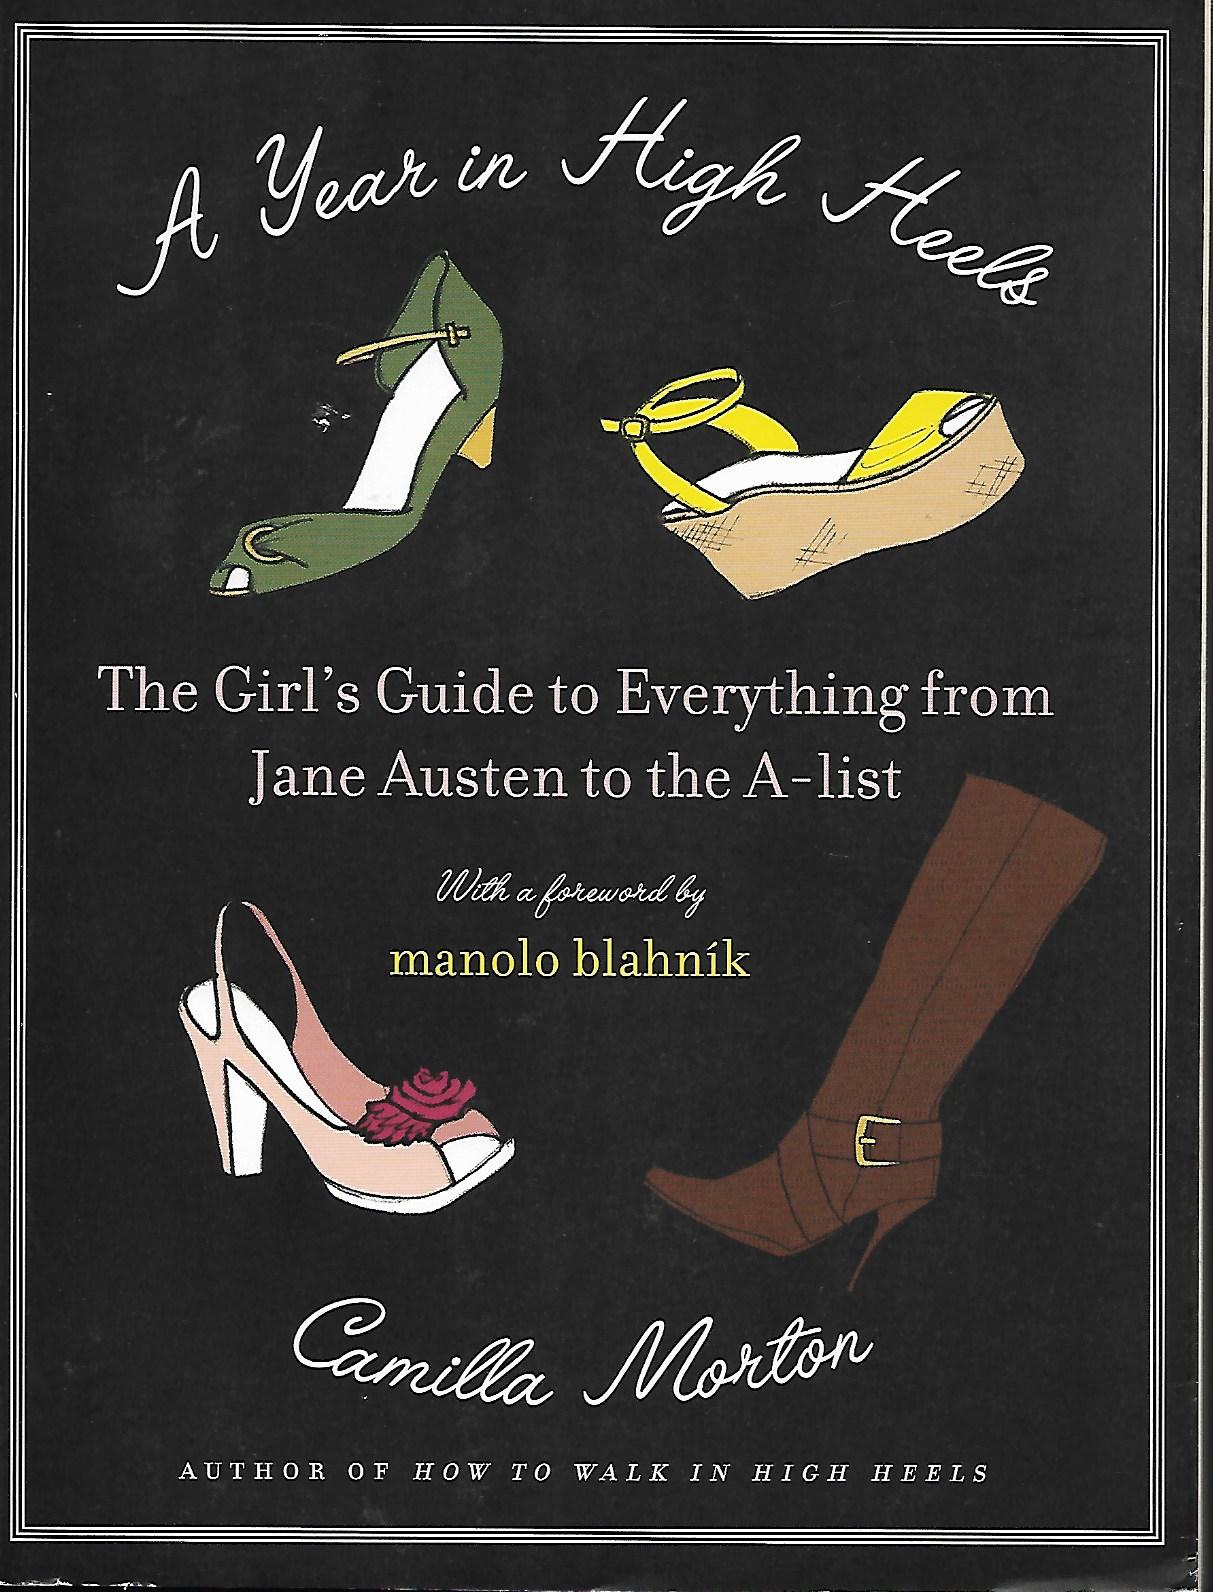 Be Careful when wearing Heels! – Ana Maria Lajusticia